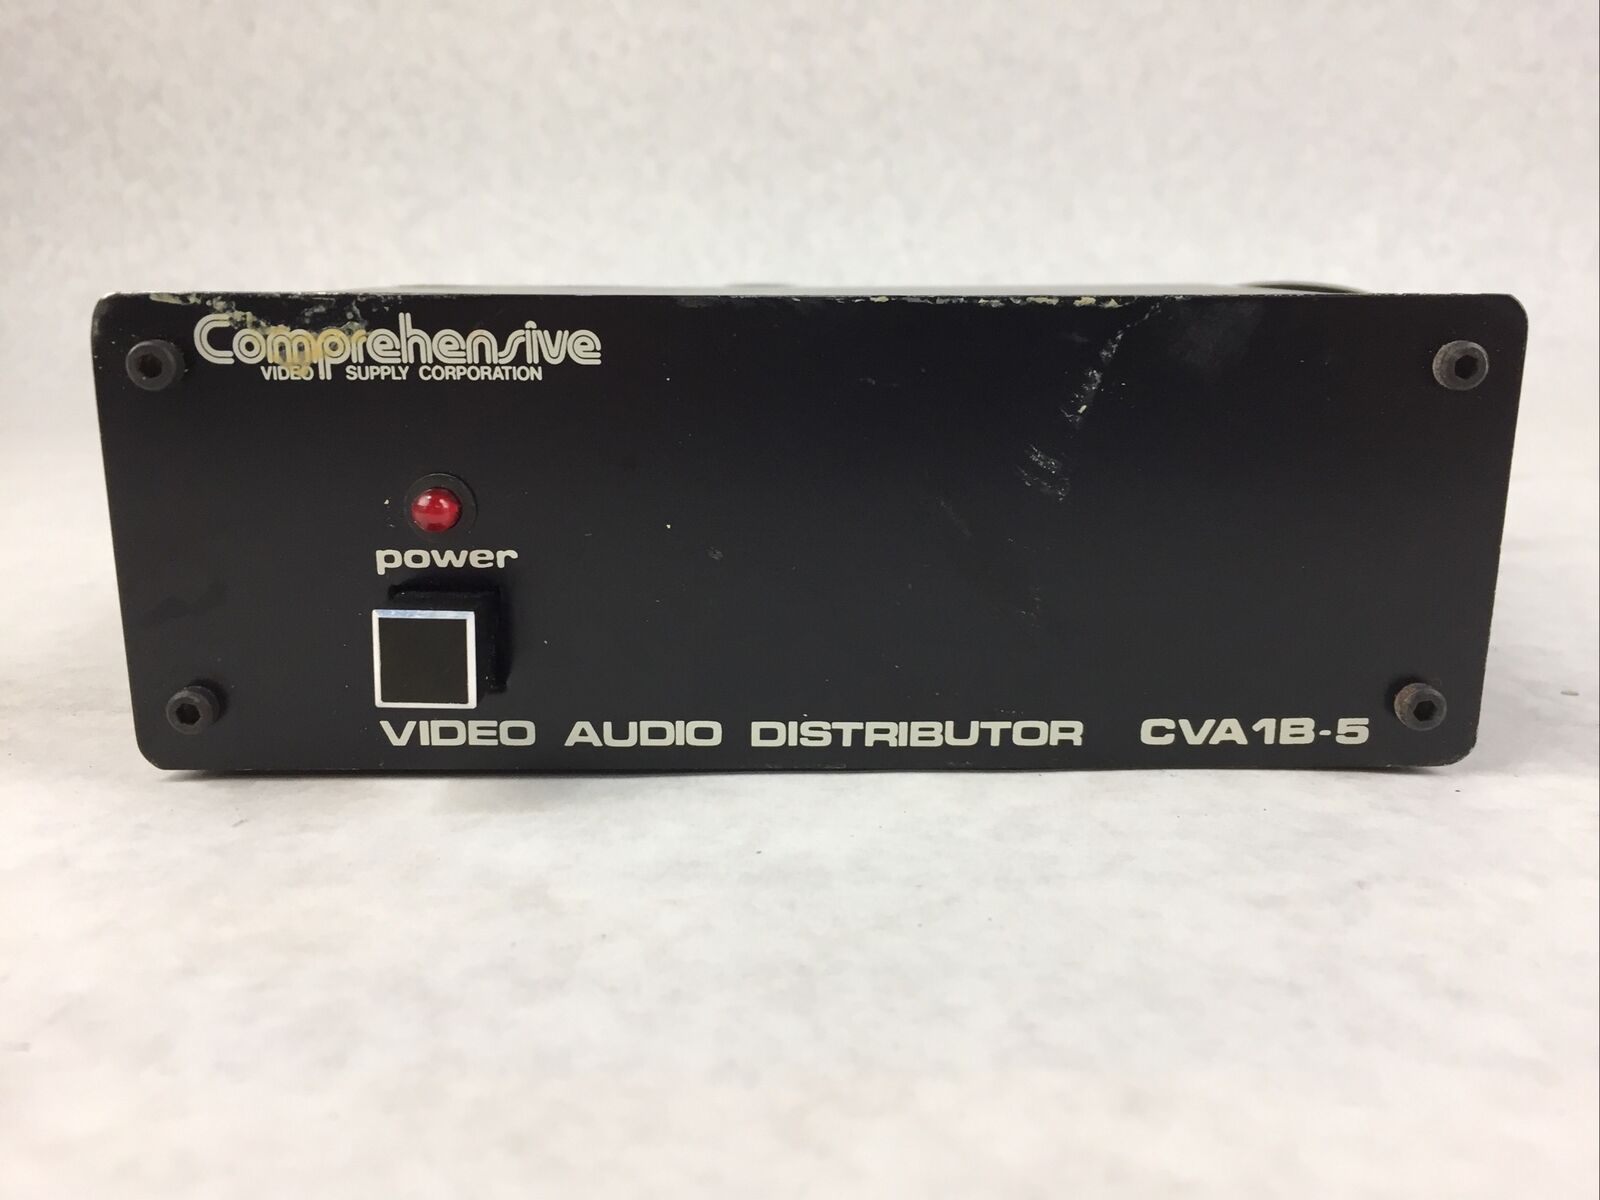 Comprehensive Video Audio Distributor CVA1B-5